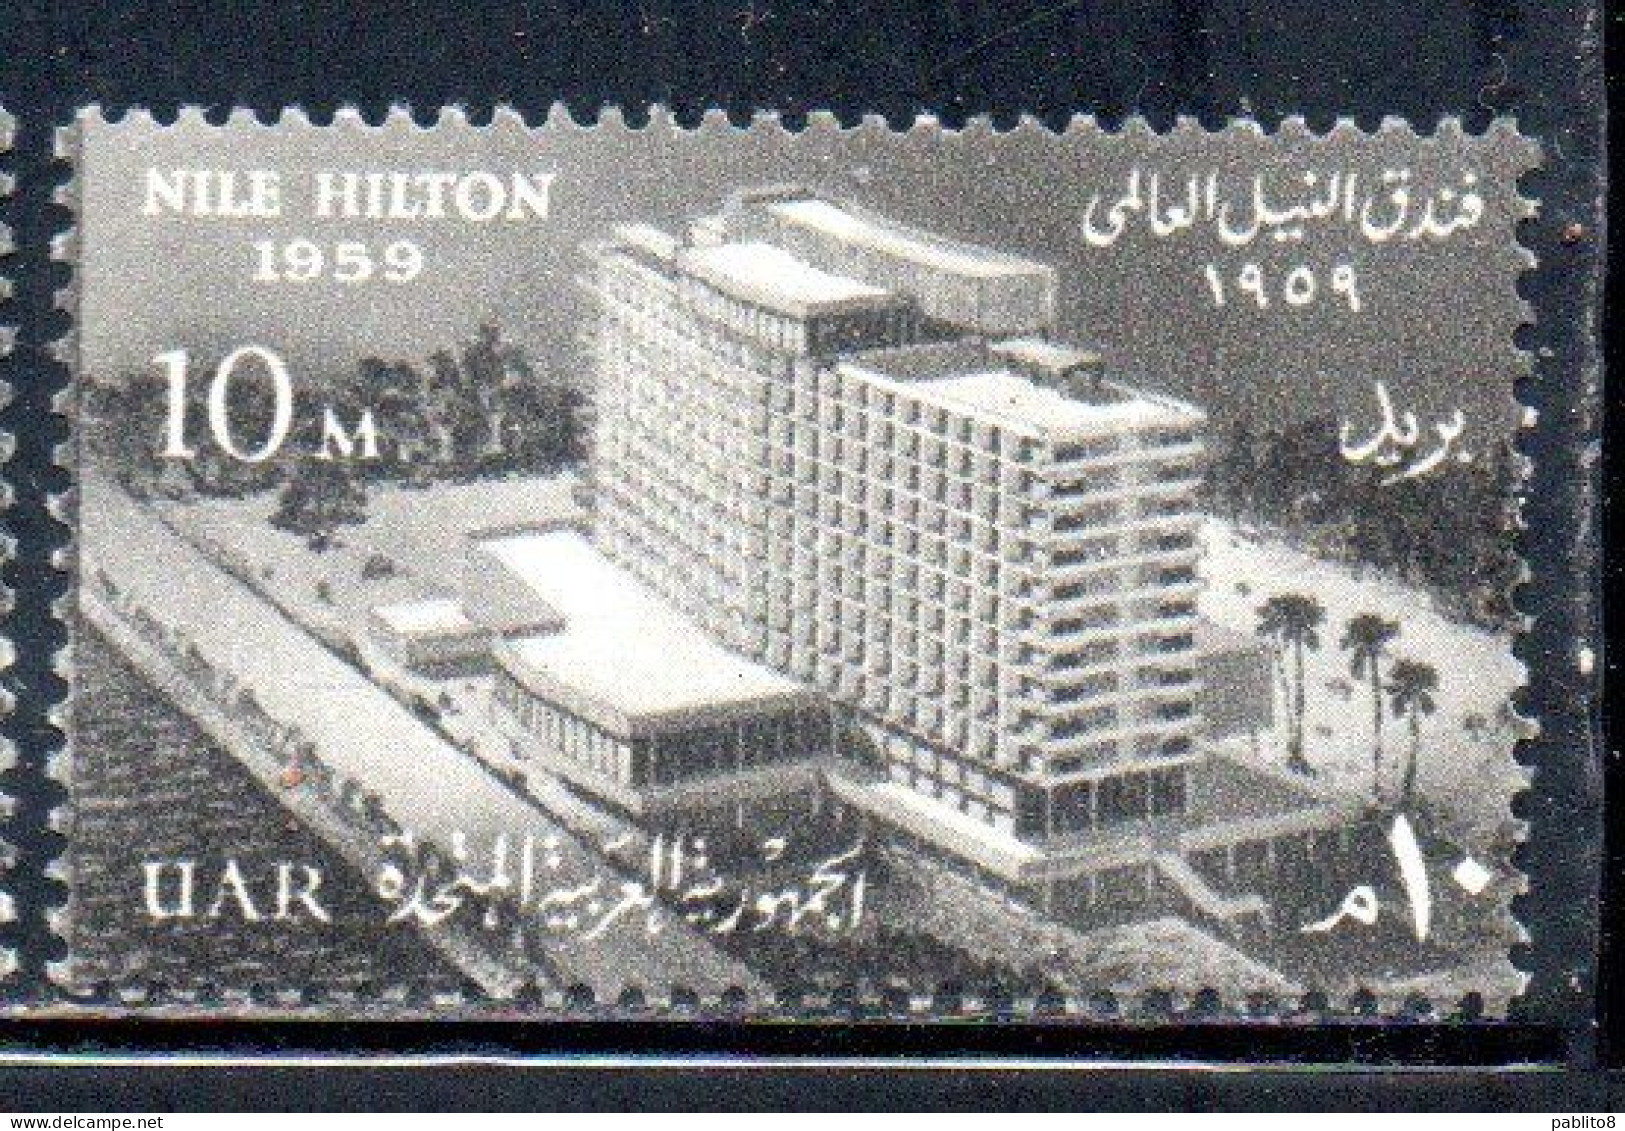 UAR EGYPT EGITTO 1959 OPENING OF THE NILE HILTON HOTEL CAIRO 10m MH - Unused Stamps